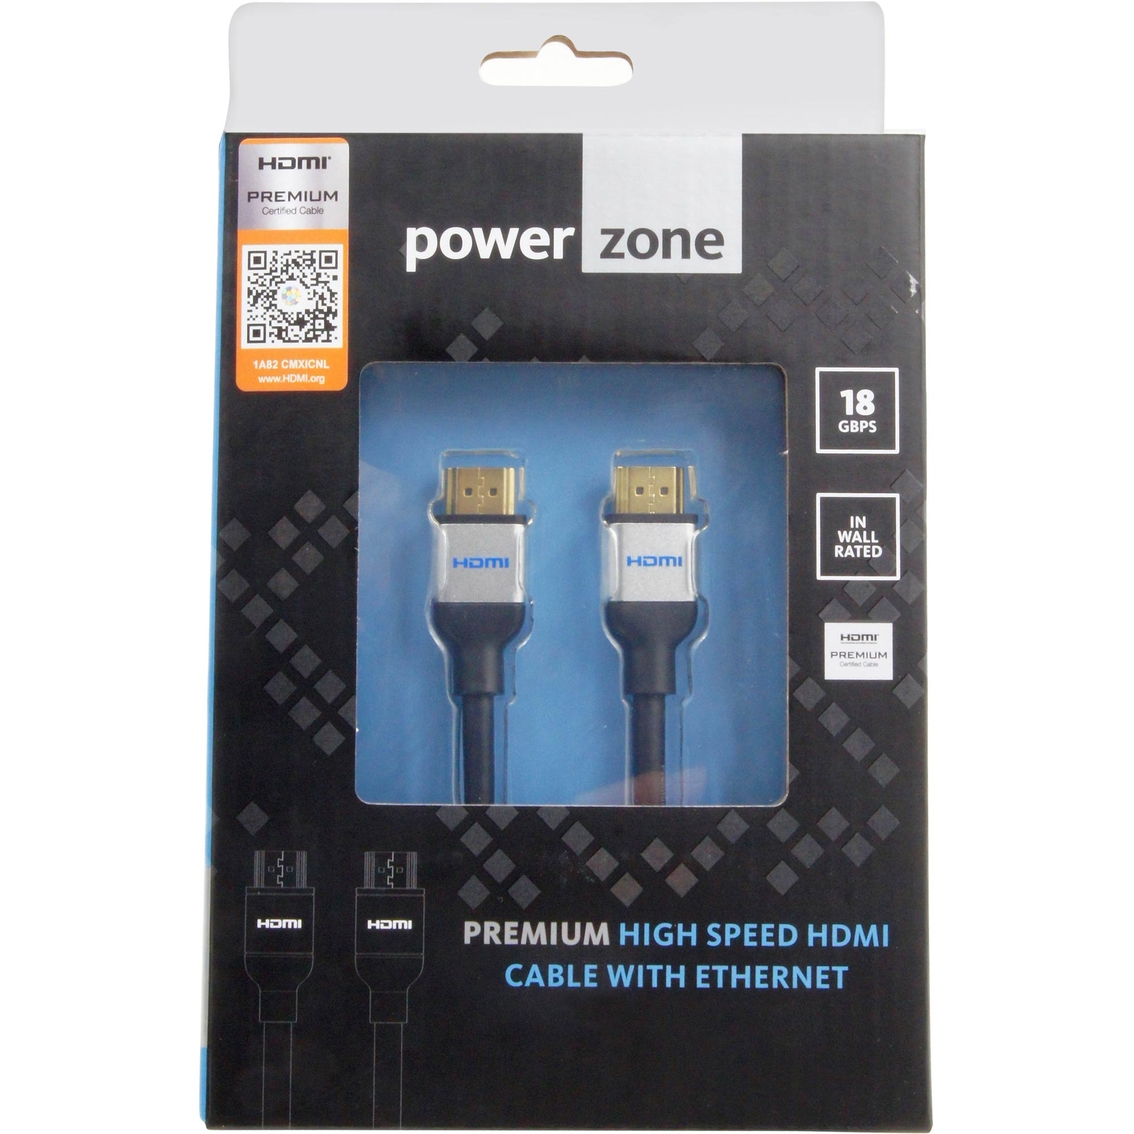 Powerzone Premium HDMI Cable - Image 3 of 4